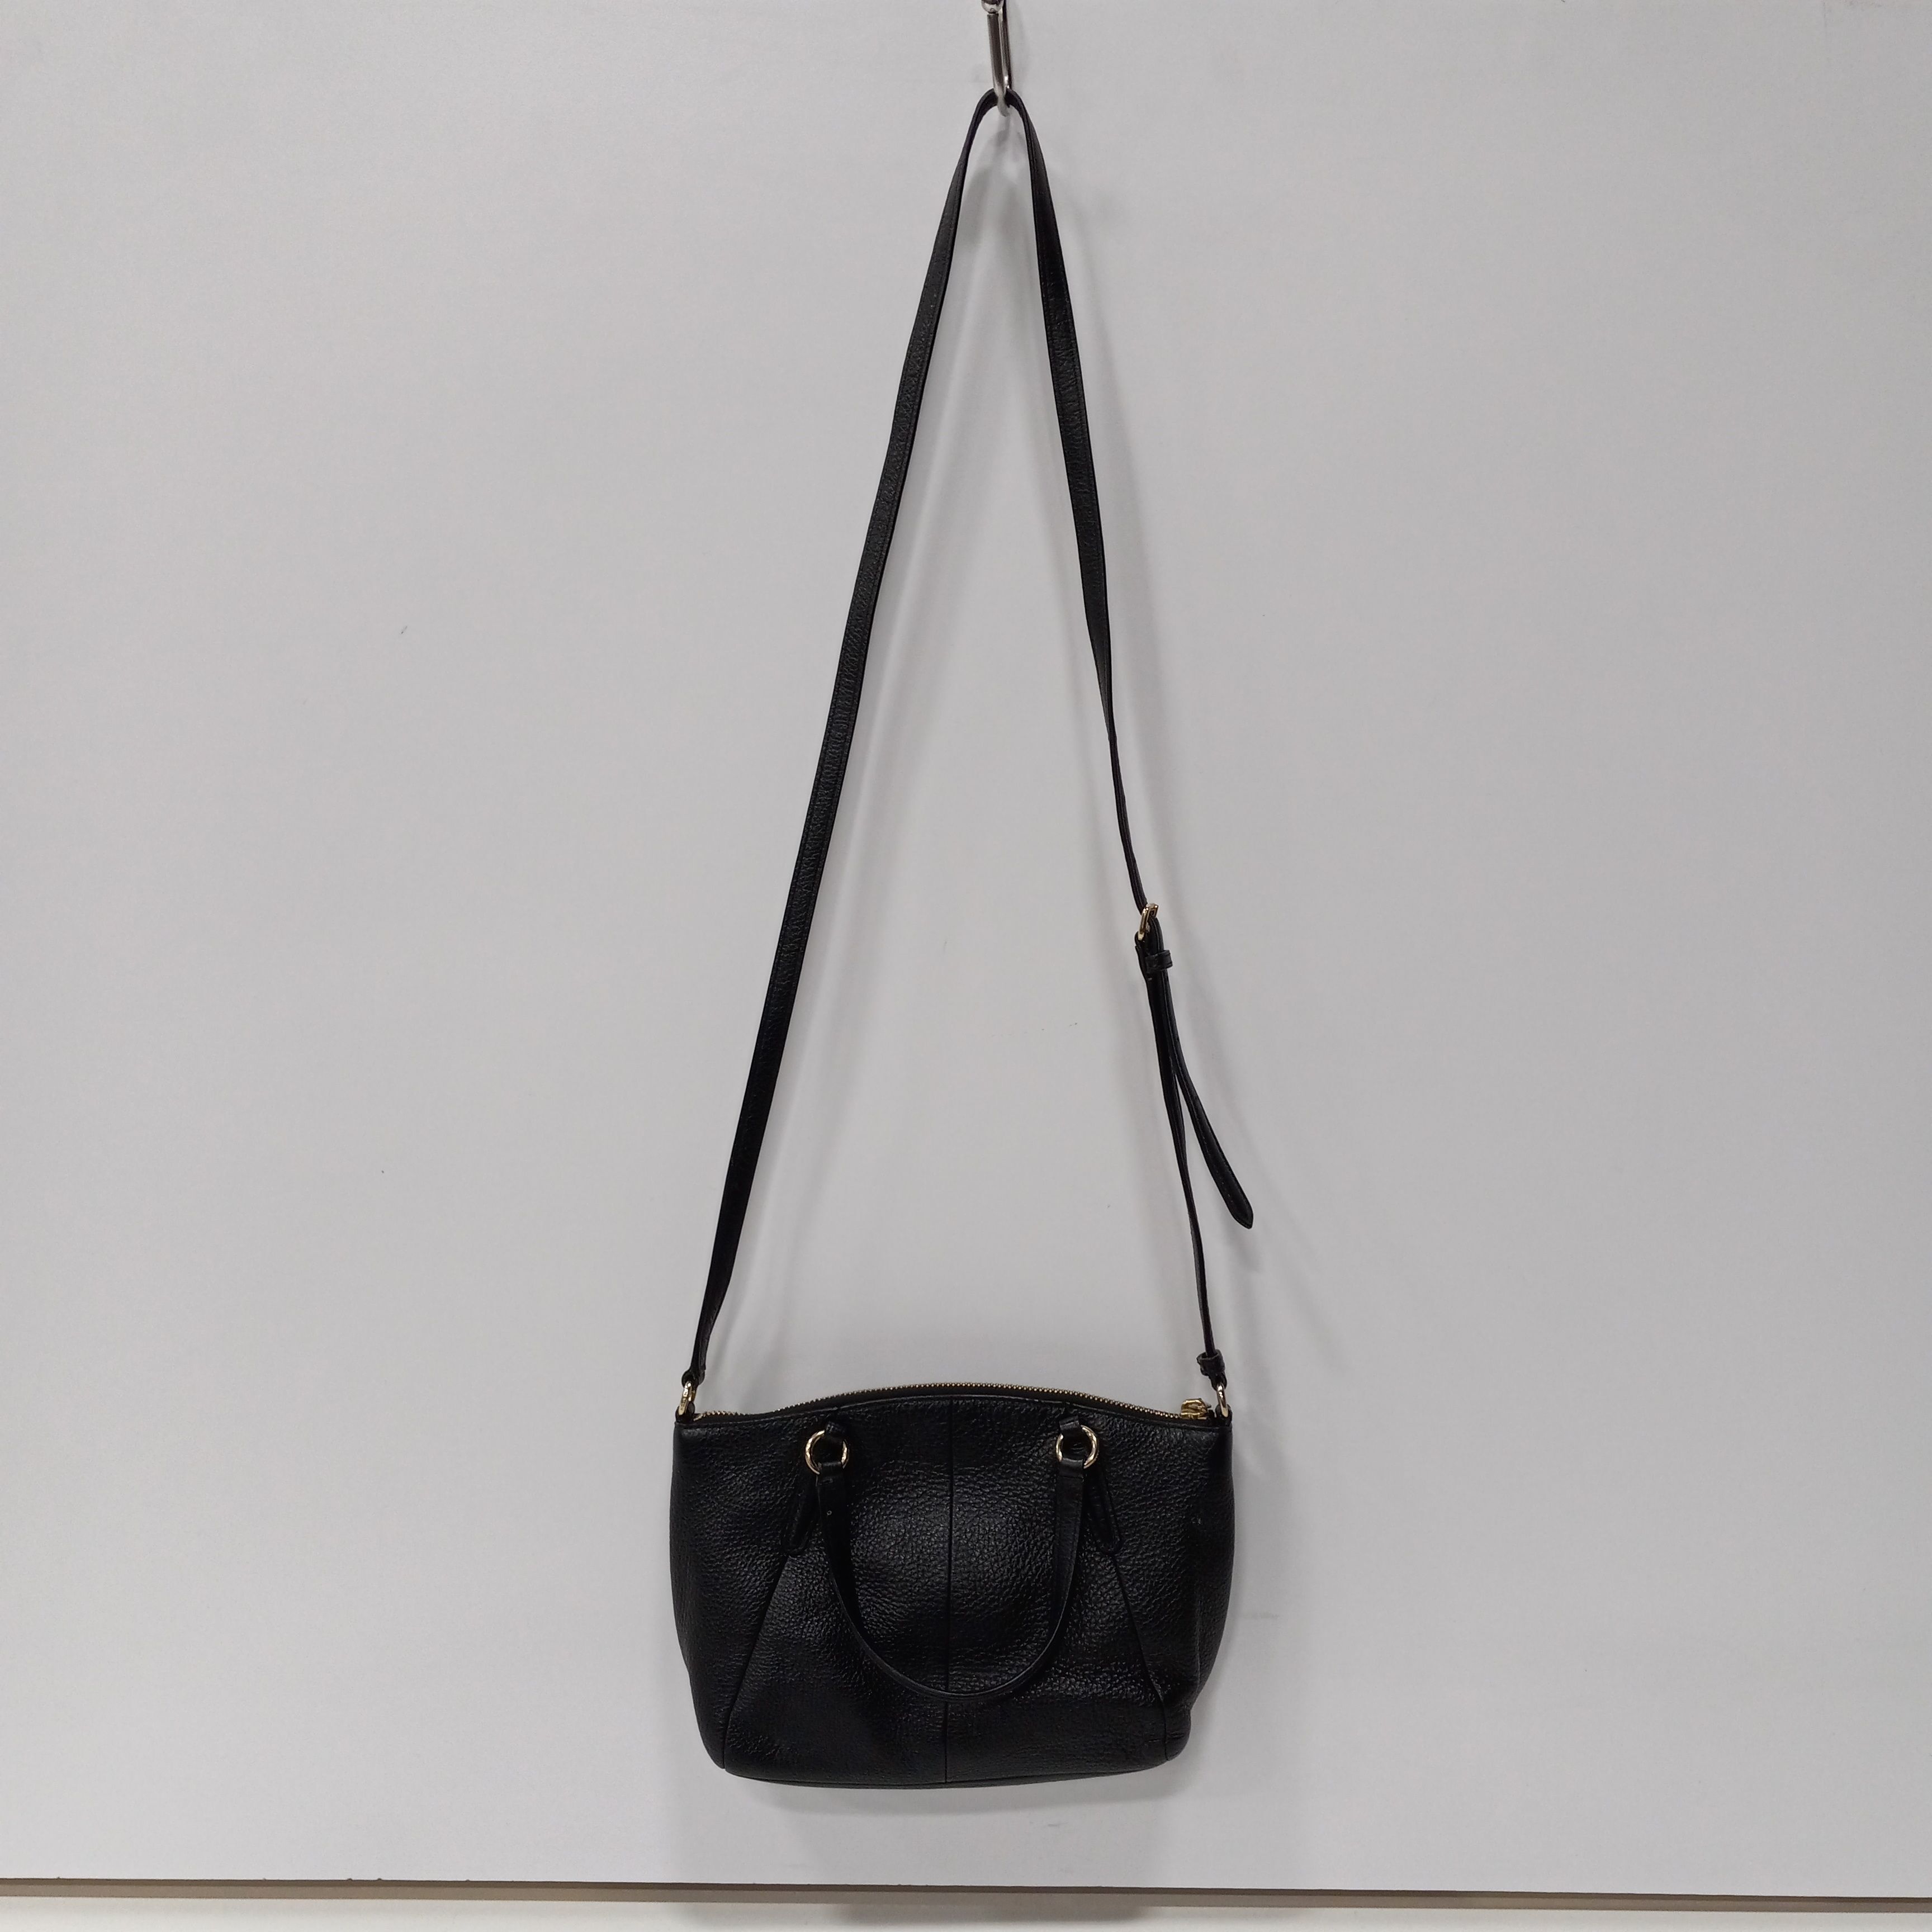 Handbag Designer By Coach O Size: Large